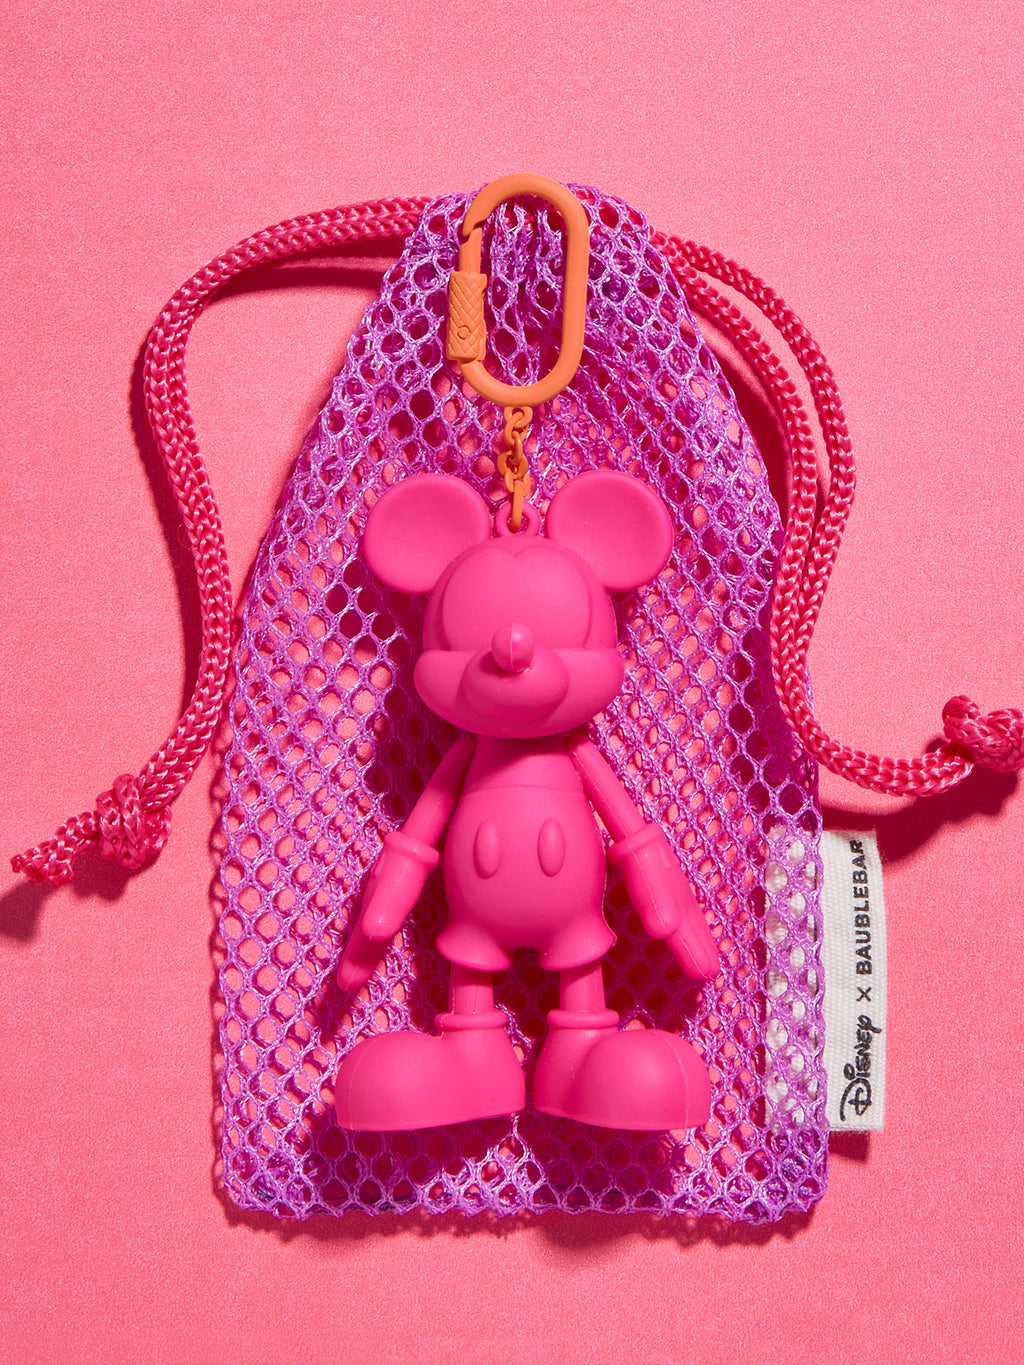 BaubleBar Mickey Mouse Bag Charm